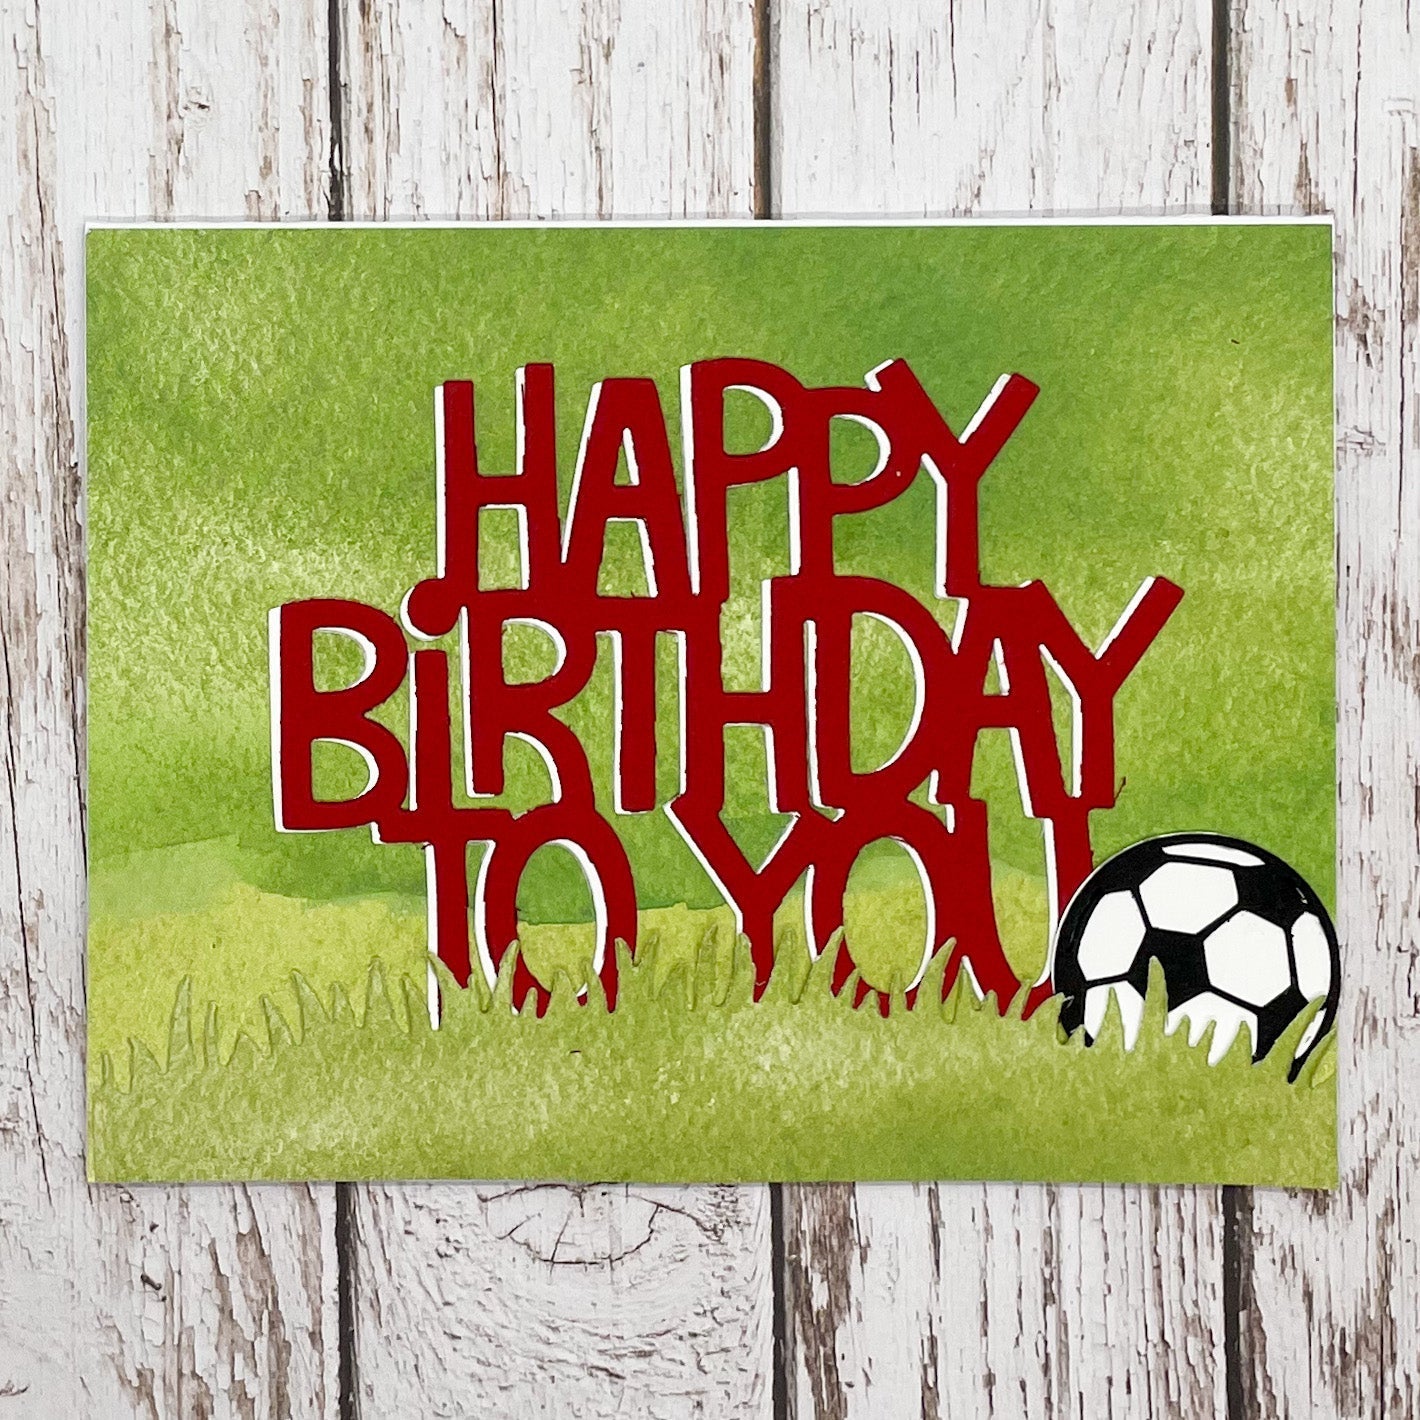 Football Team Themed Handmade Birthday Card (Choose You 